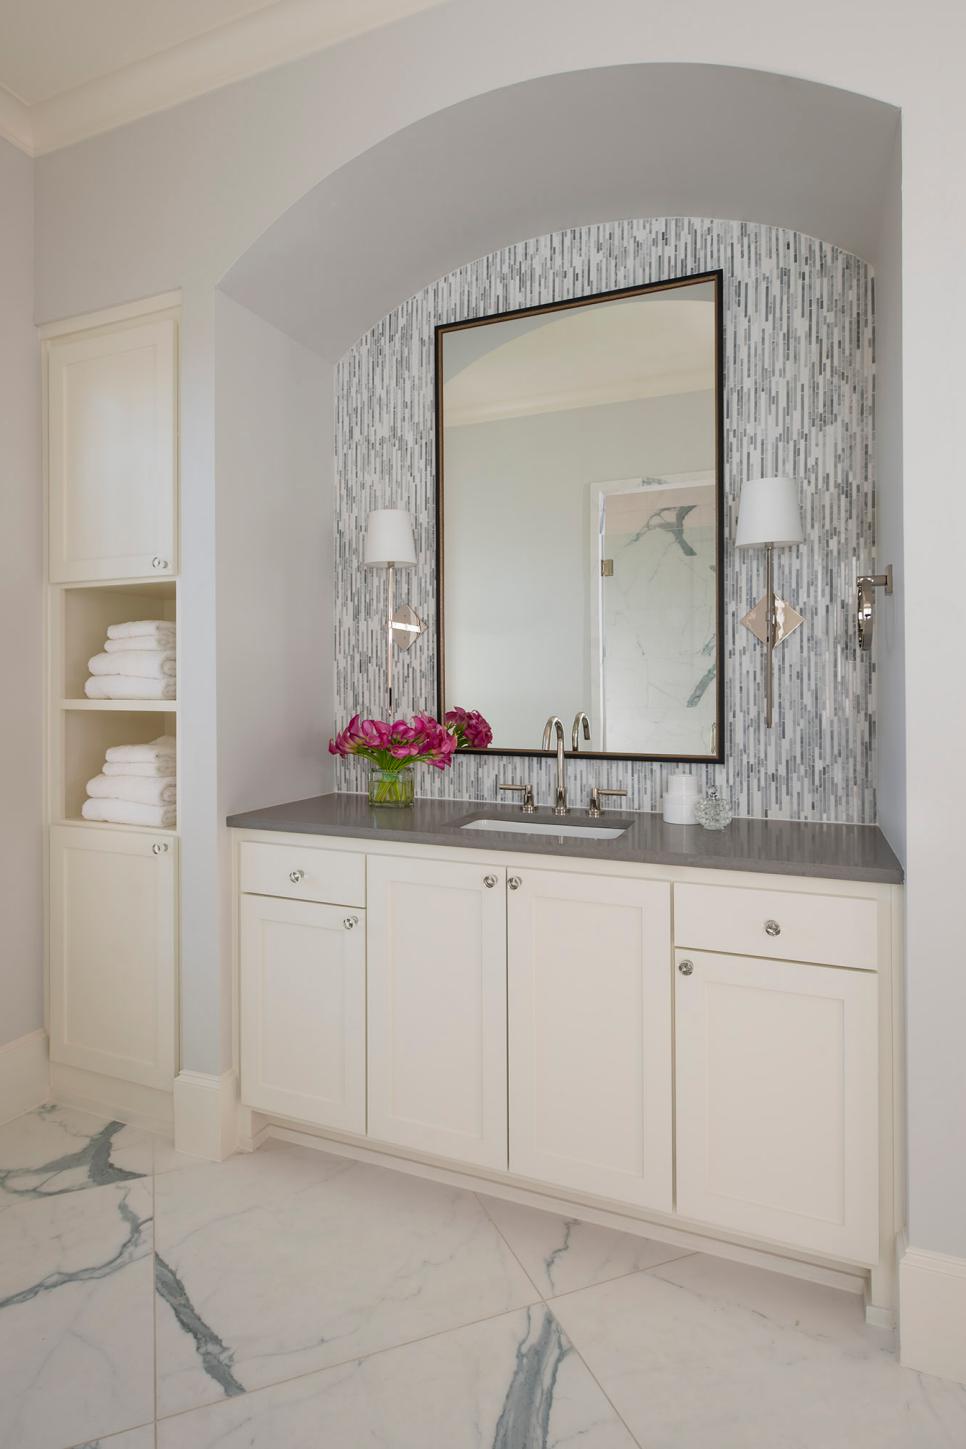 Arched Bathroom Vanity With Vertical Tile Backsplash, Gray Countertop